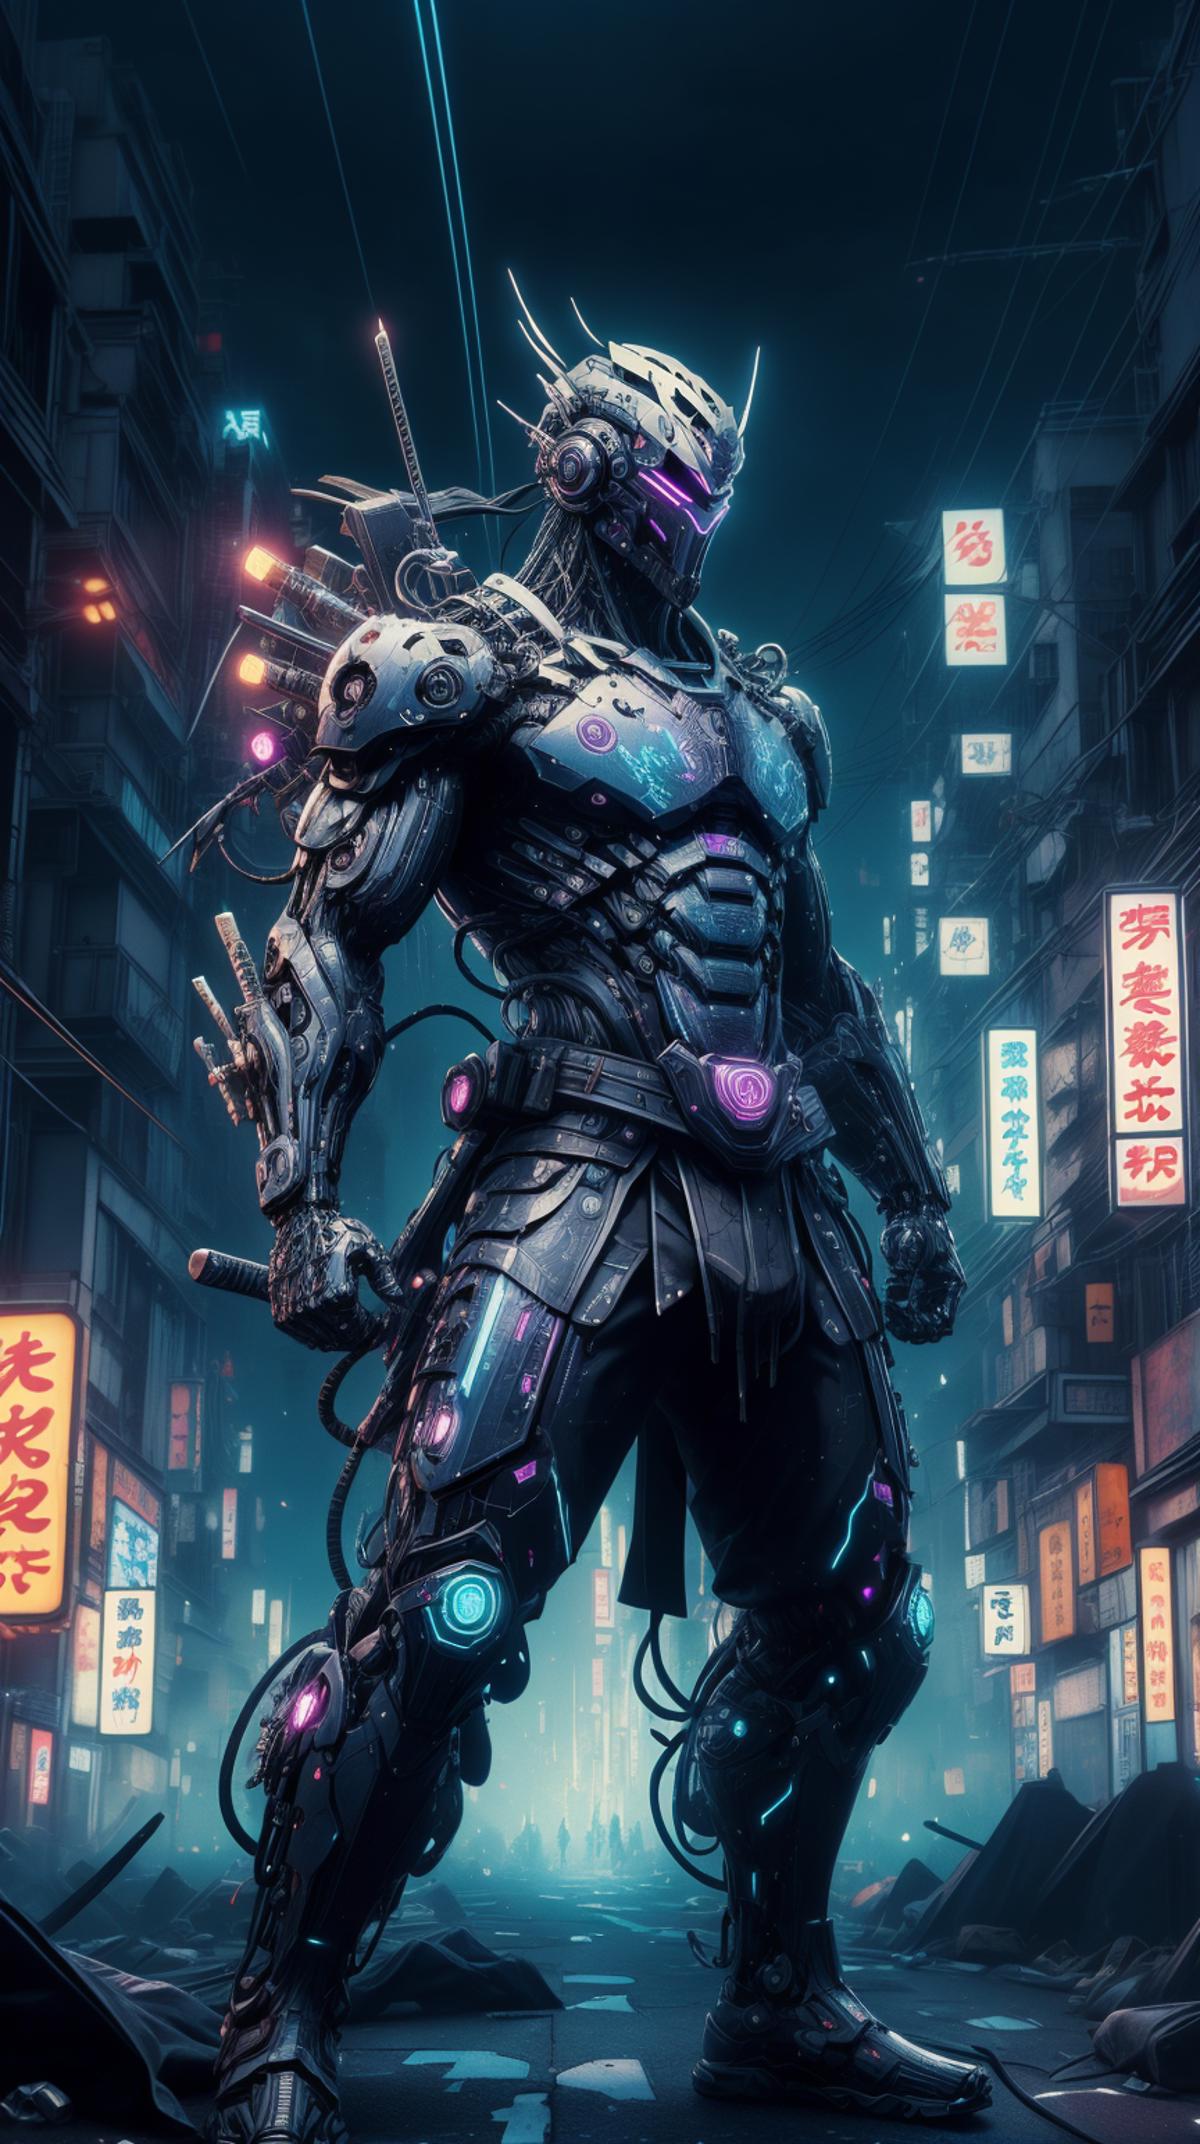 Cyberpunk World image by mnemic